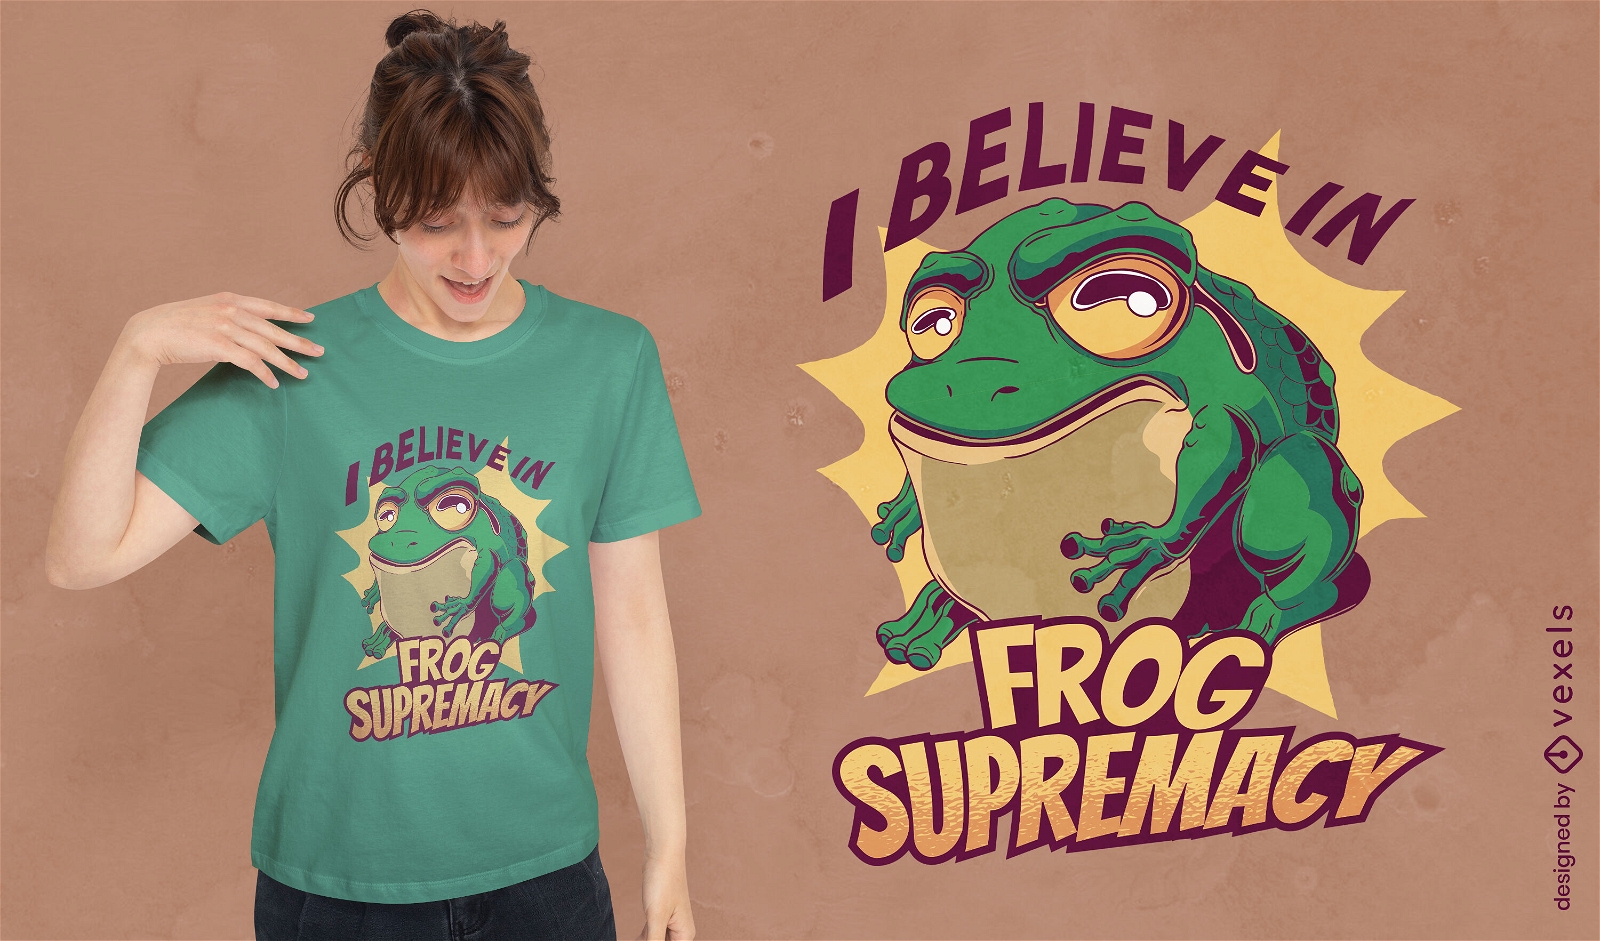 Frog supremacy t-shirt design